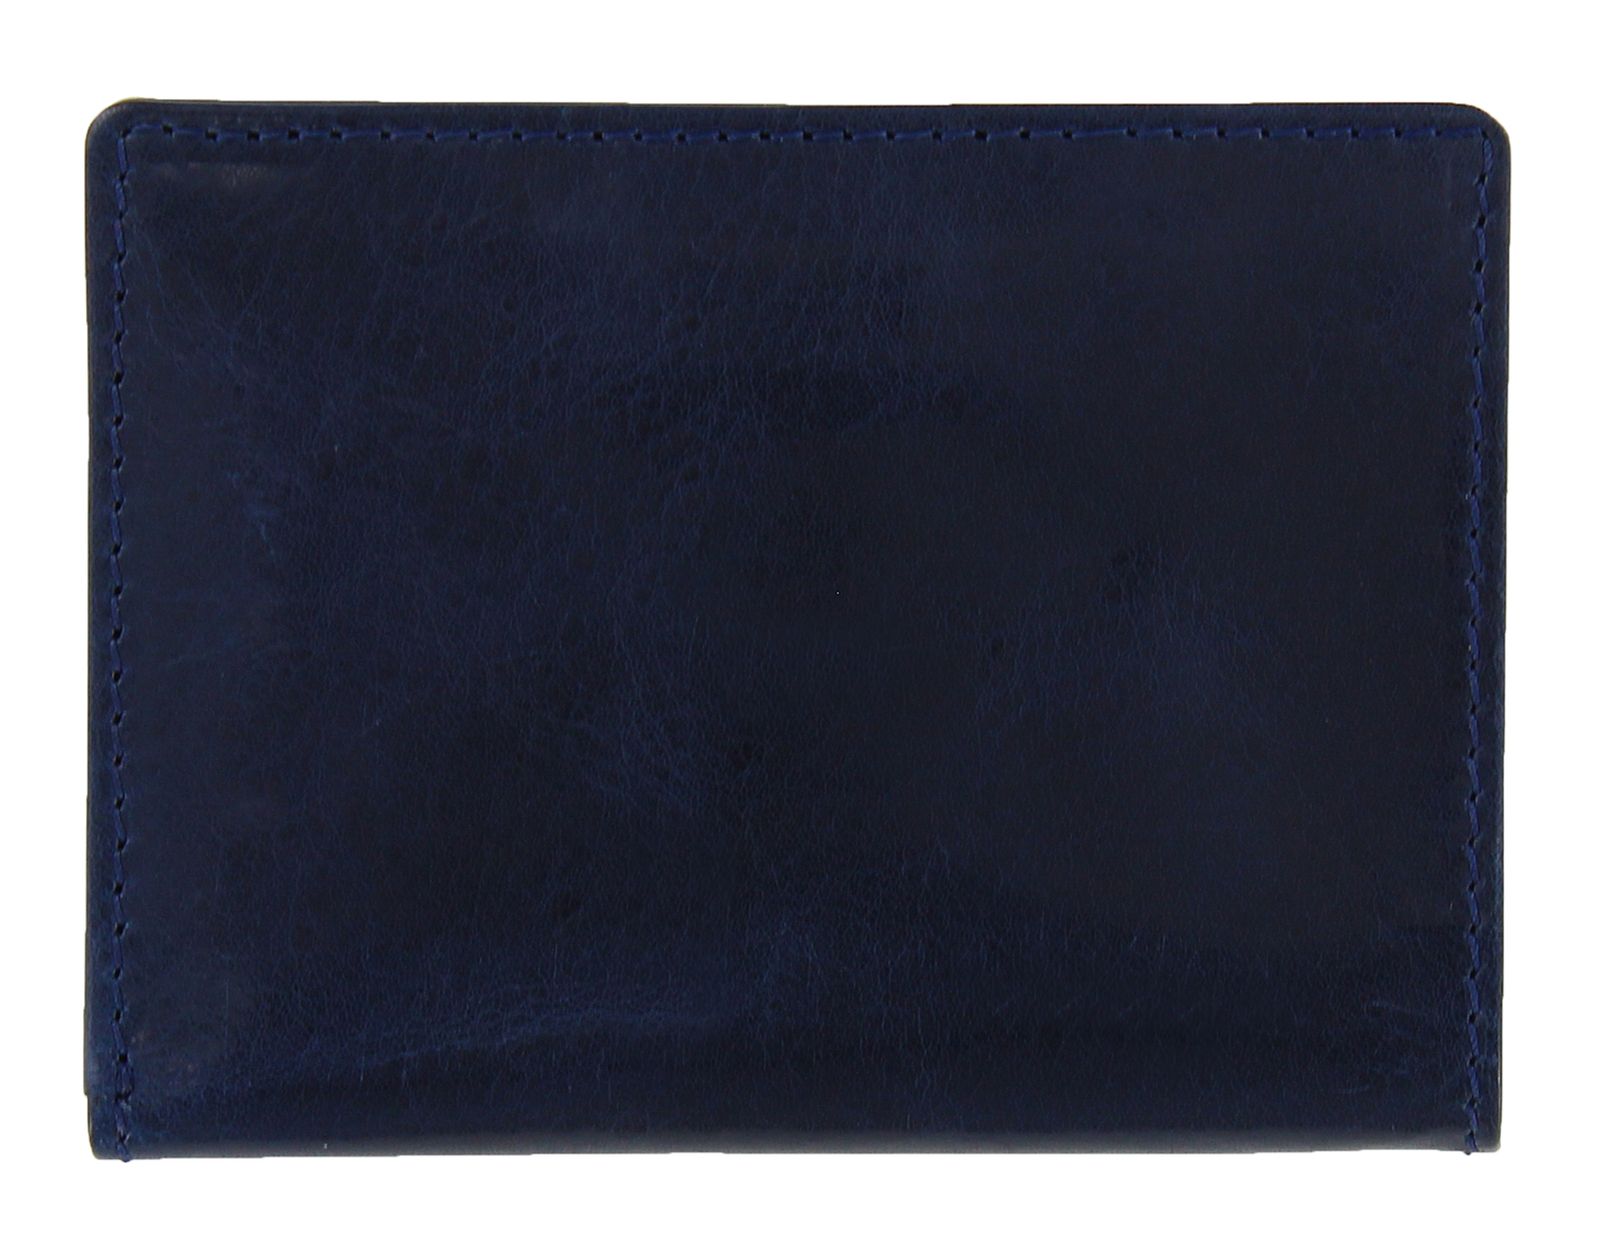 Braun Büffel Arezzo Coin Purse S Dark Blue | Buy bags, purses ...